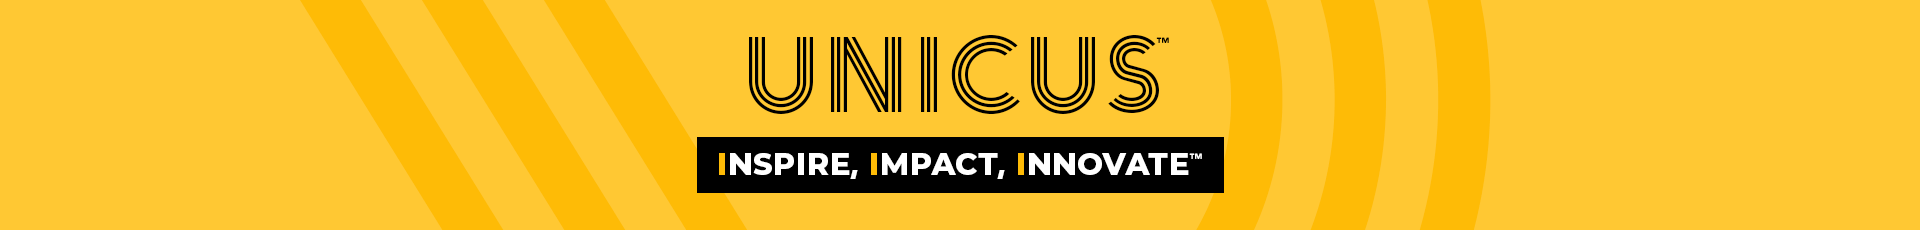 Unicus Creative Agency